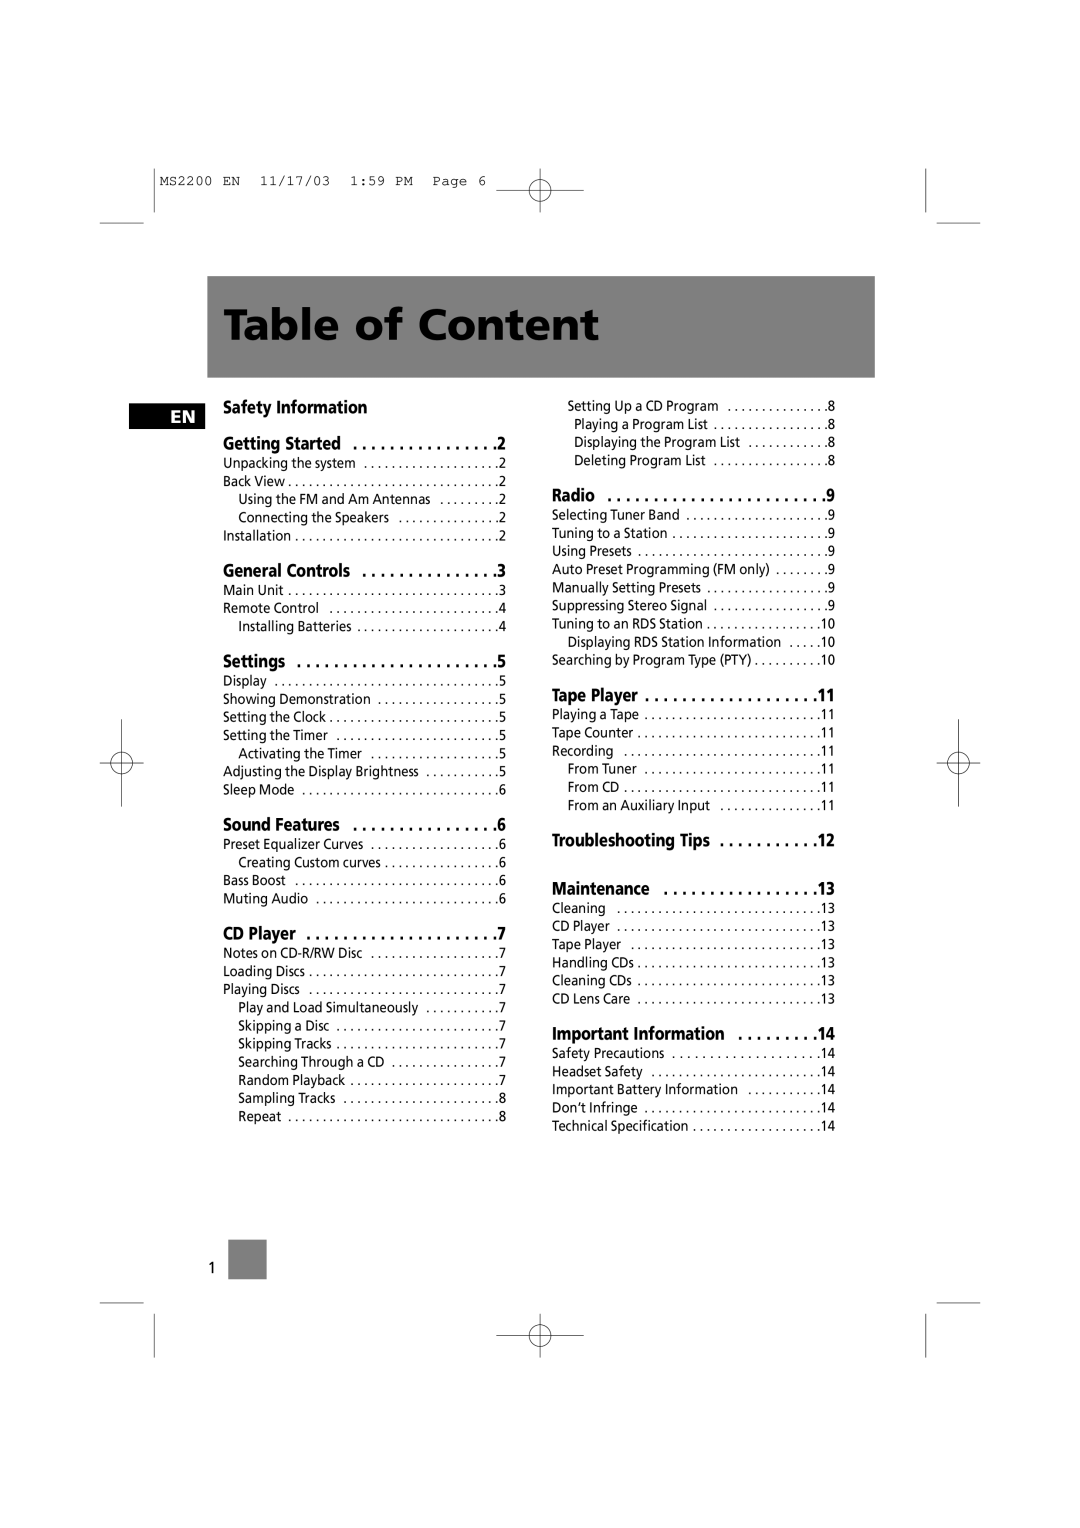 Technicolor - Thomson MS2200 manual Table of Content 